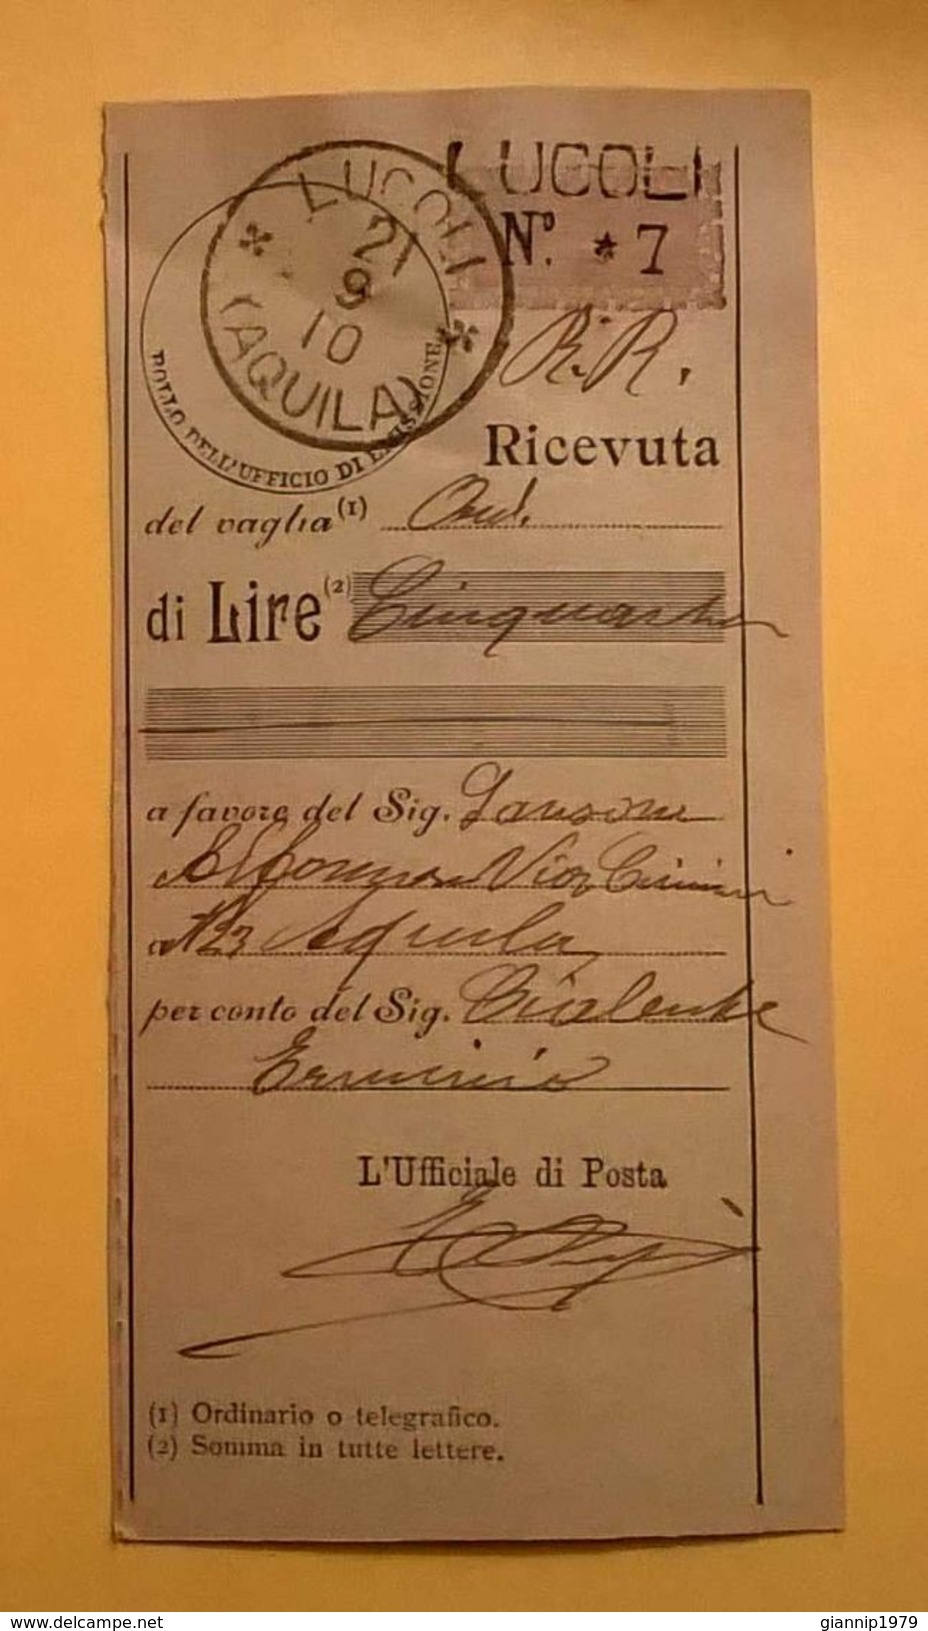 VAGLIA POSTALE RICEVUTA LUCOLI 1910 AQUILA - Tax On Money Orders